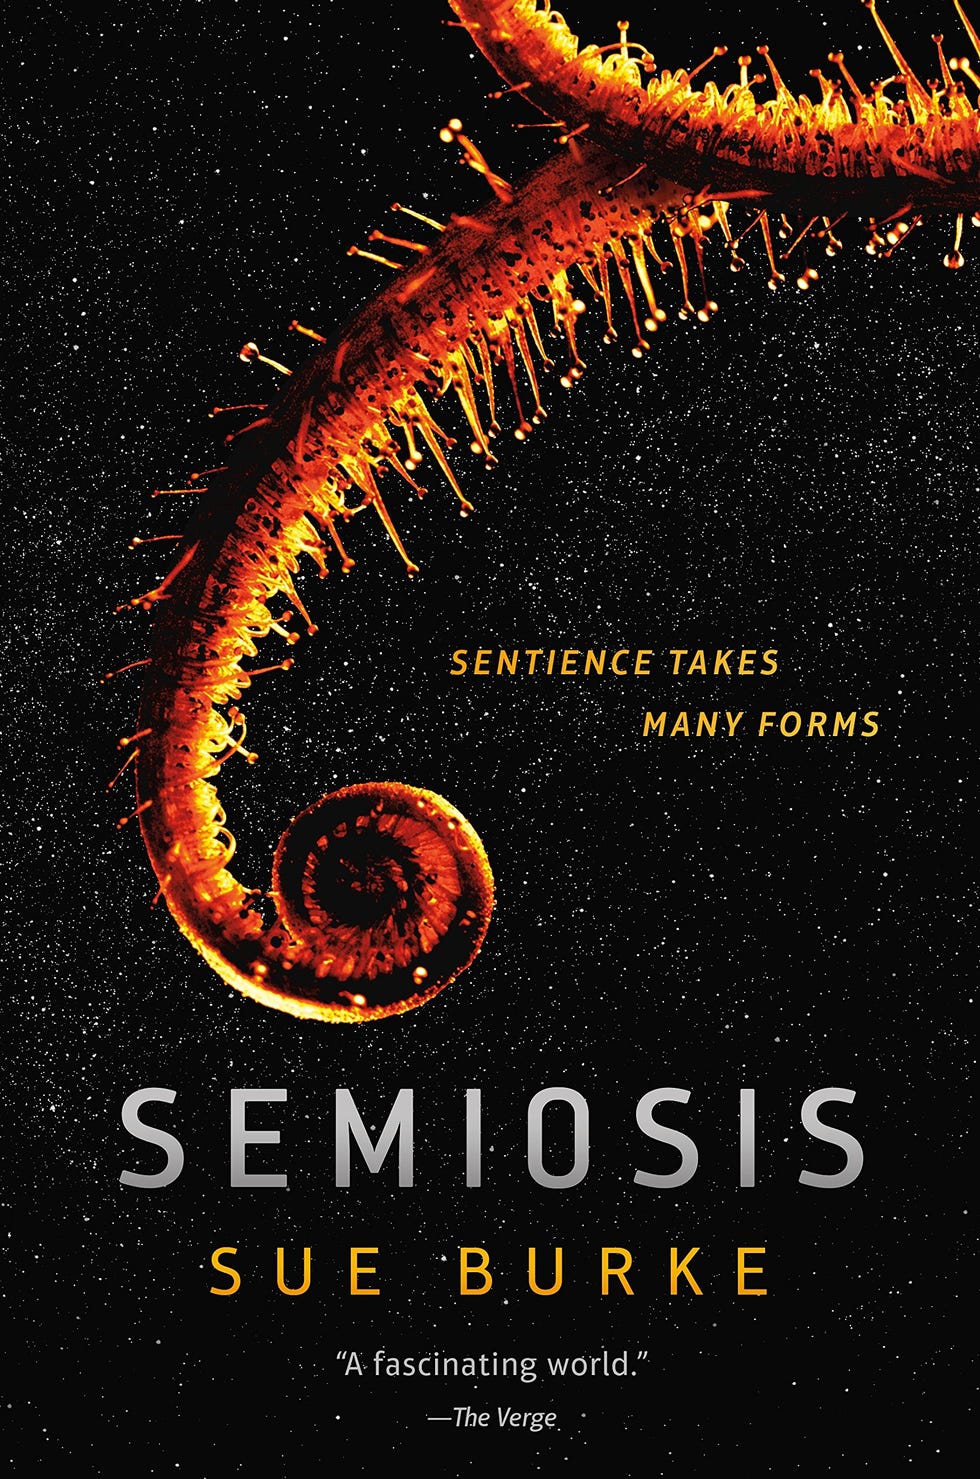 Semiosis, by Sue Burke